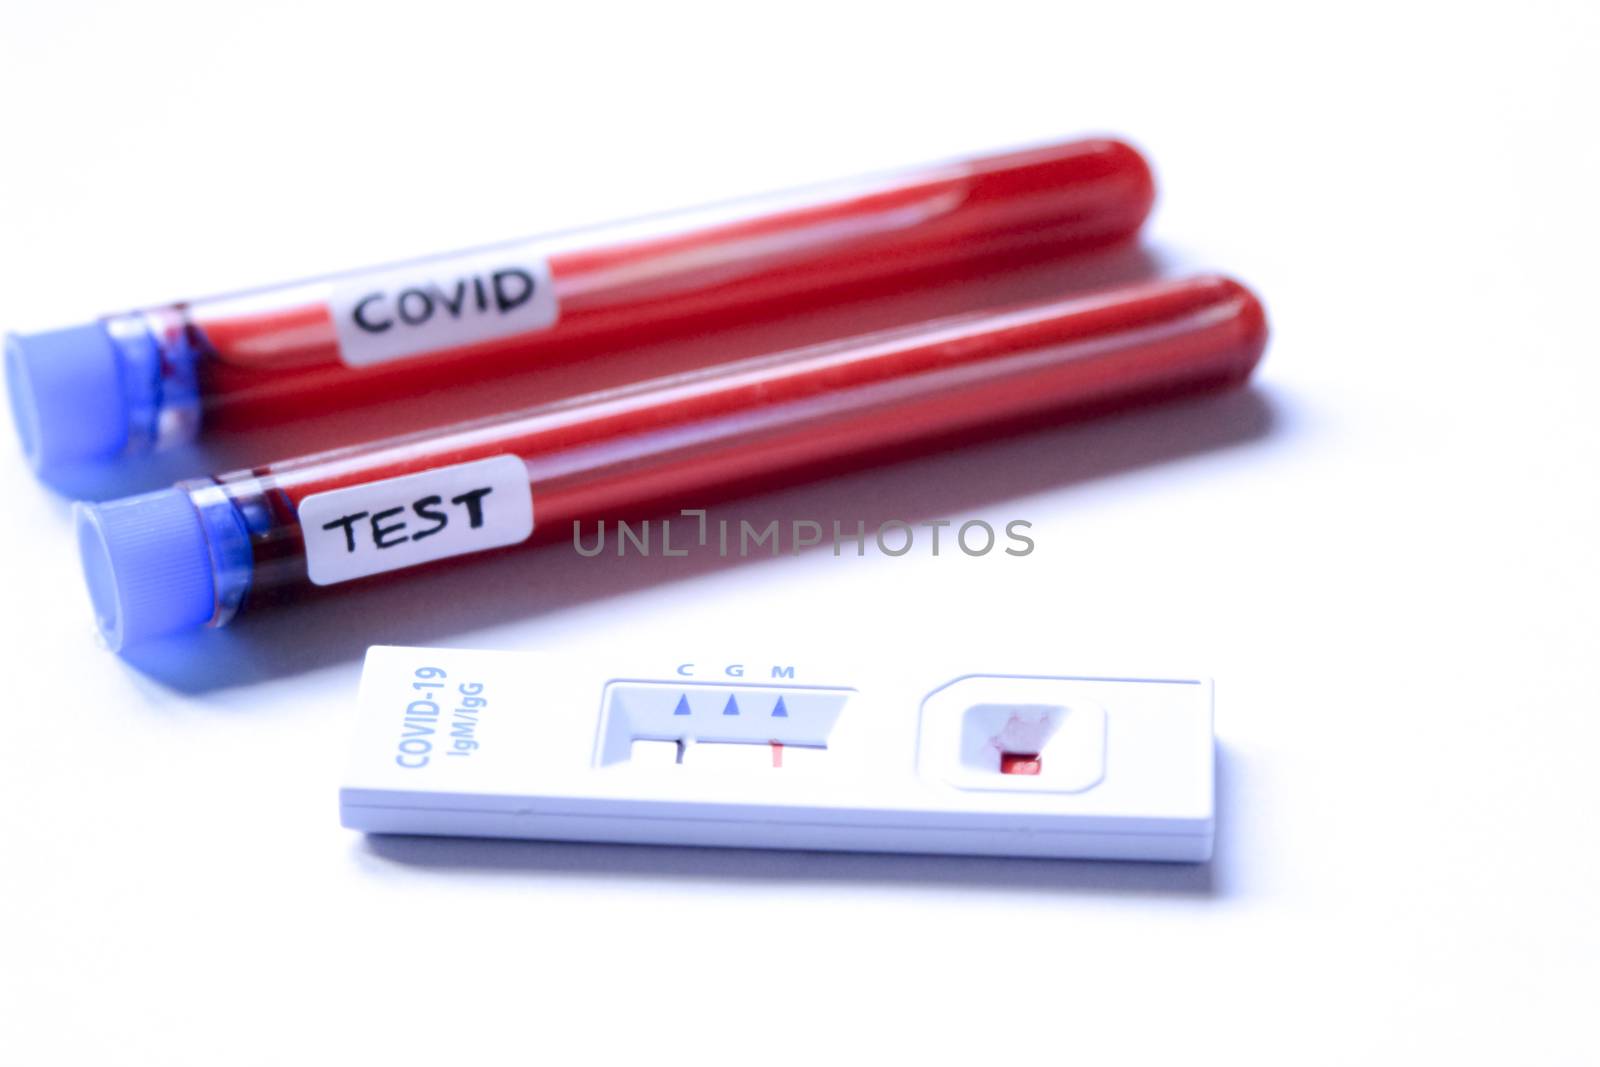 Medical worker placing blood sample on Rapid Diagnostic Test by soniabonet